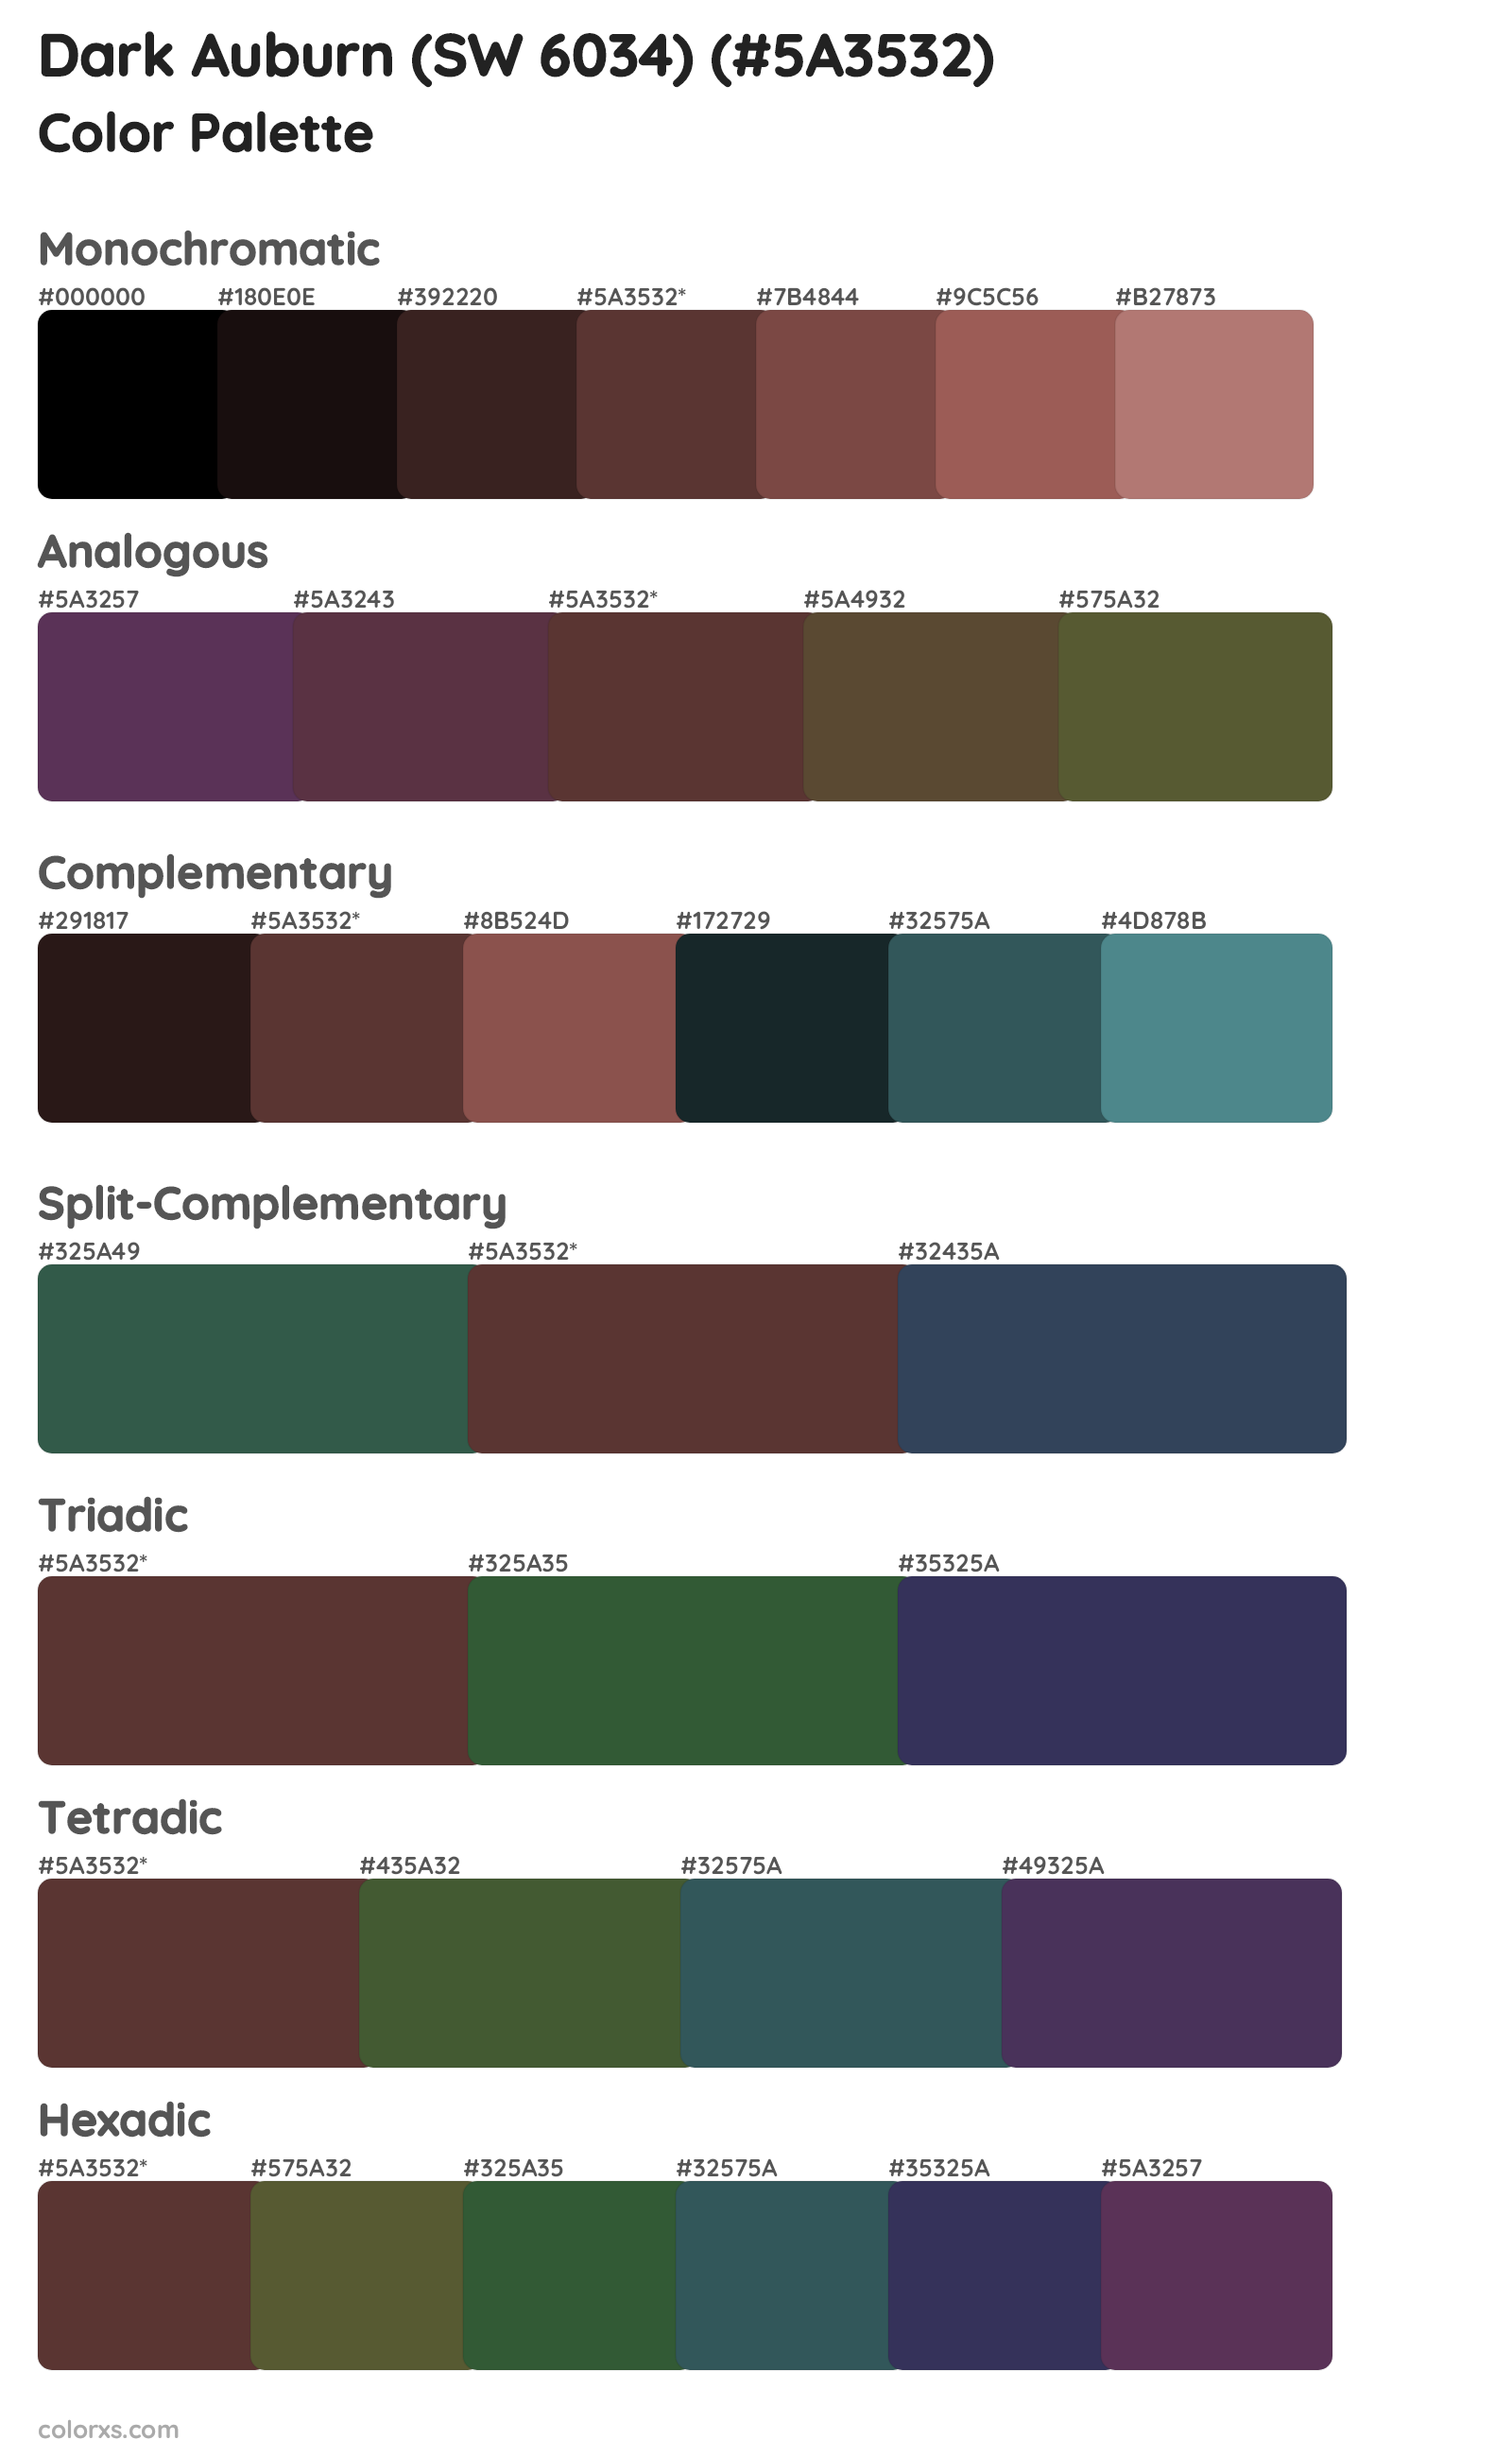 Dark Auburn (SW 6034) Color Scheme Palettes